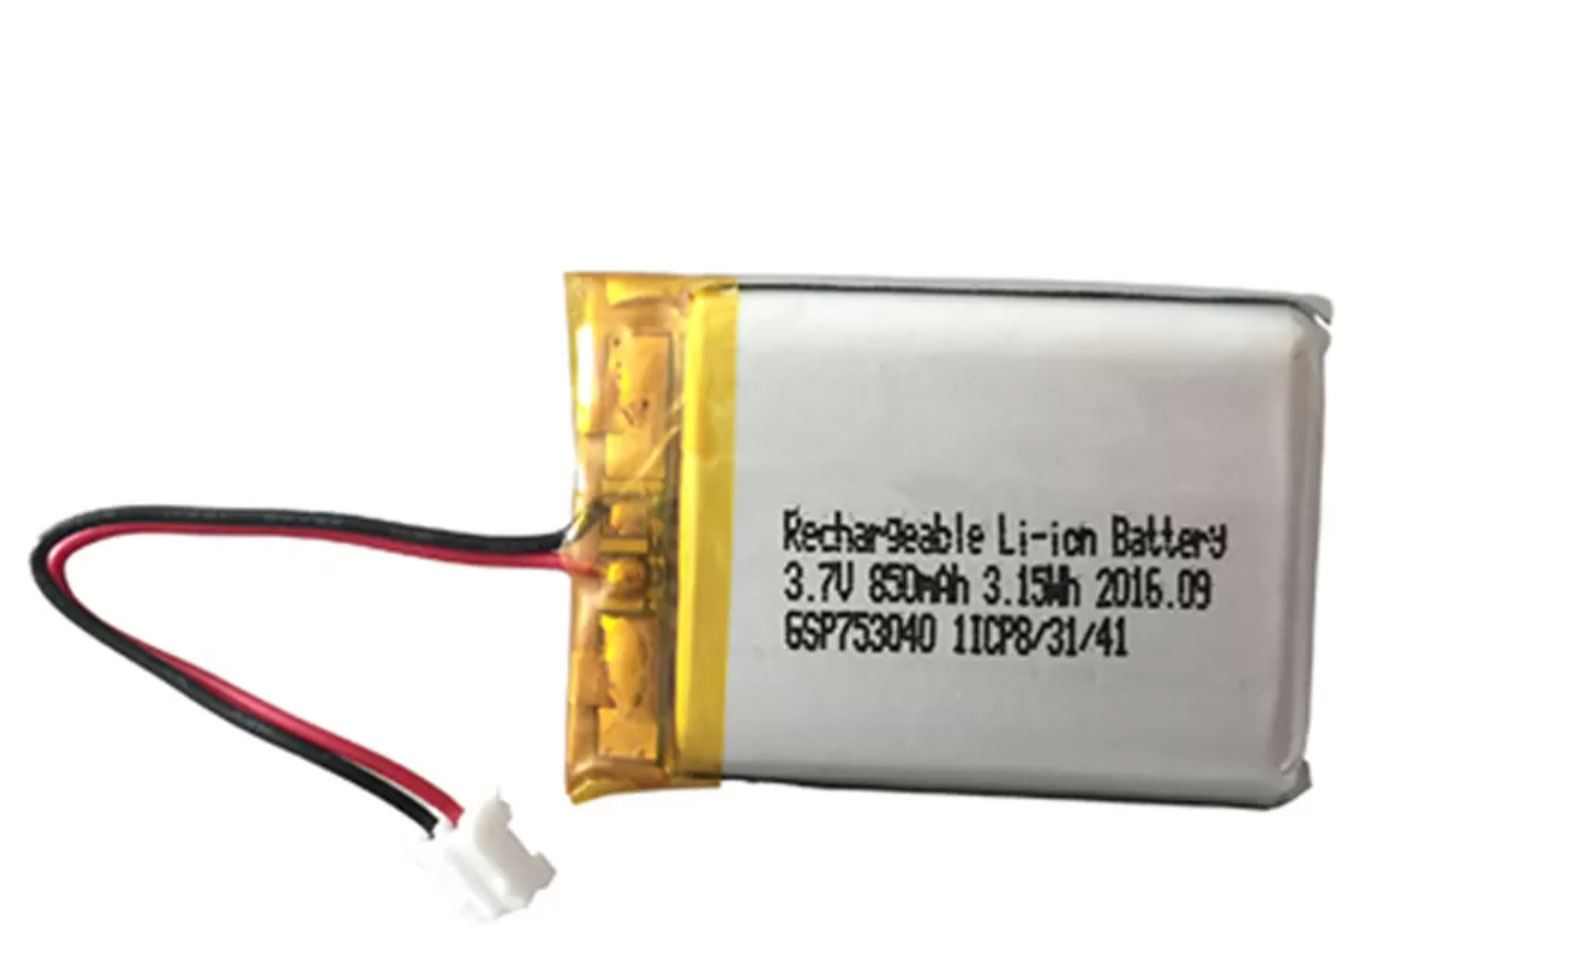 Li-polymer battery